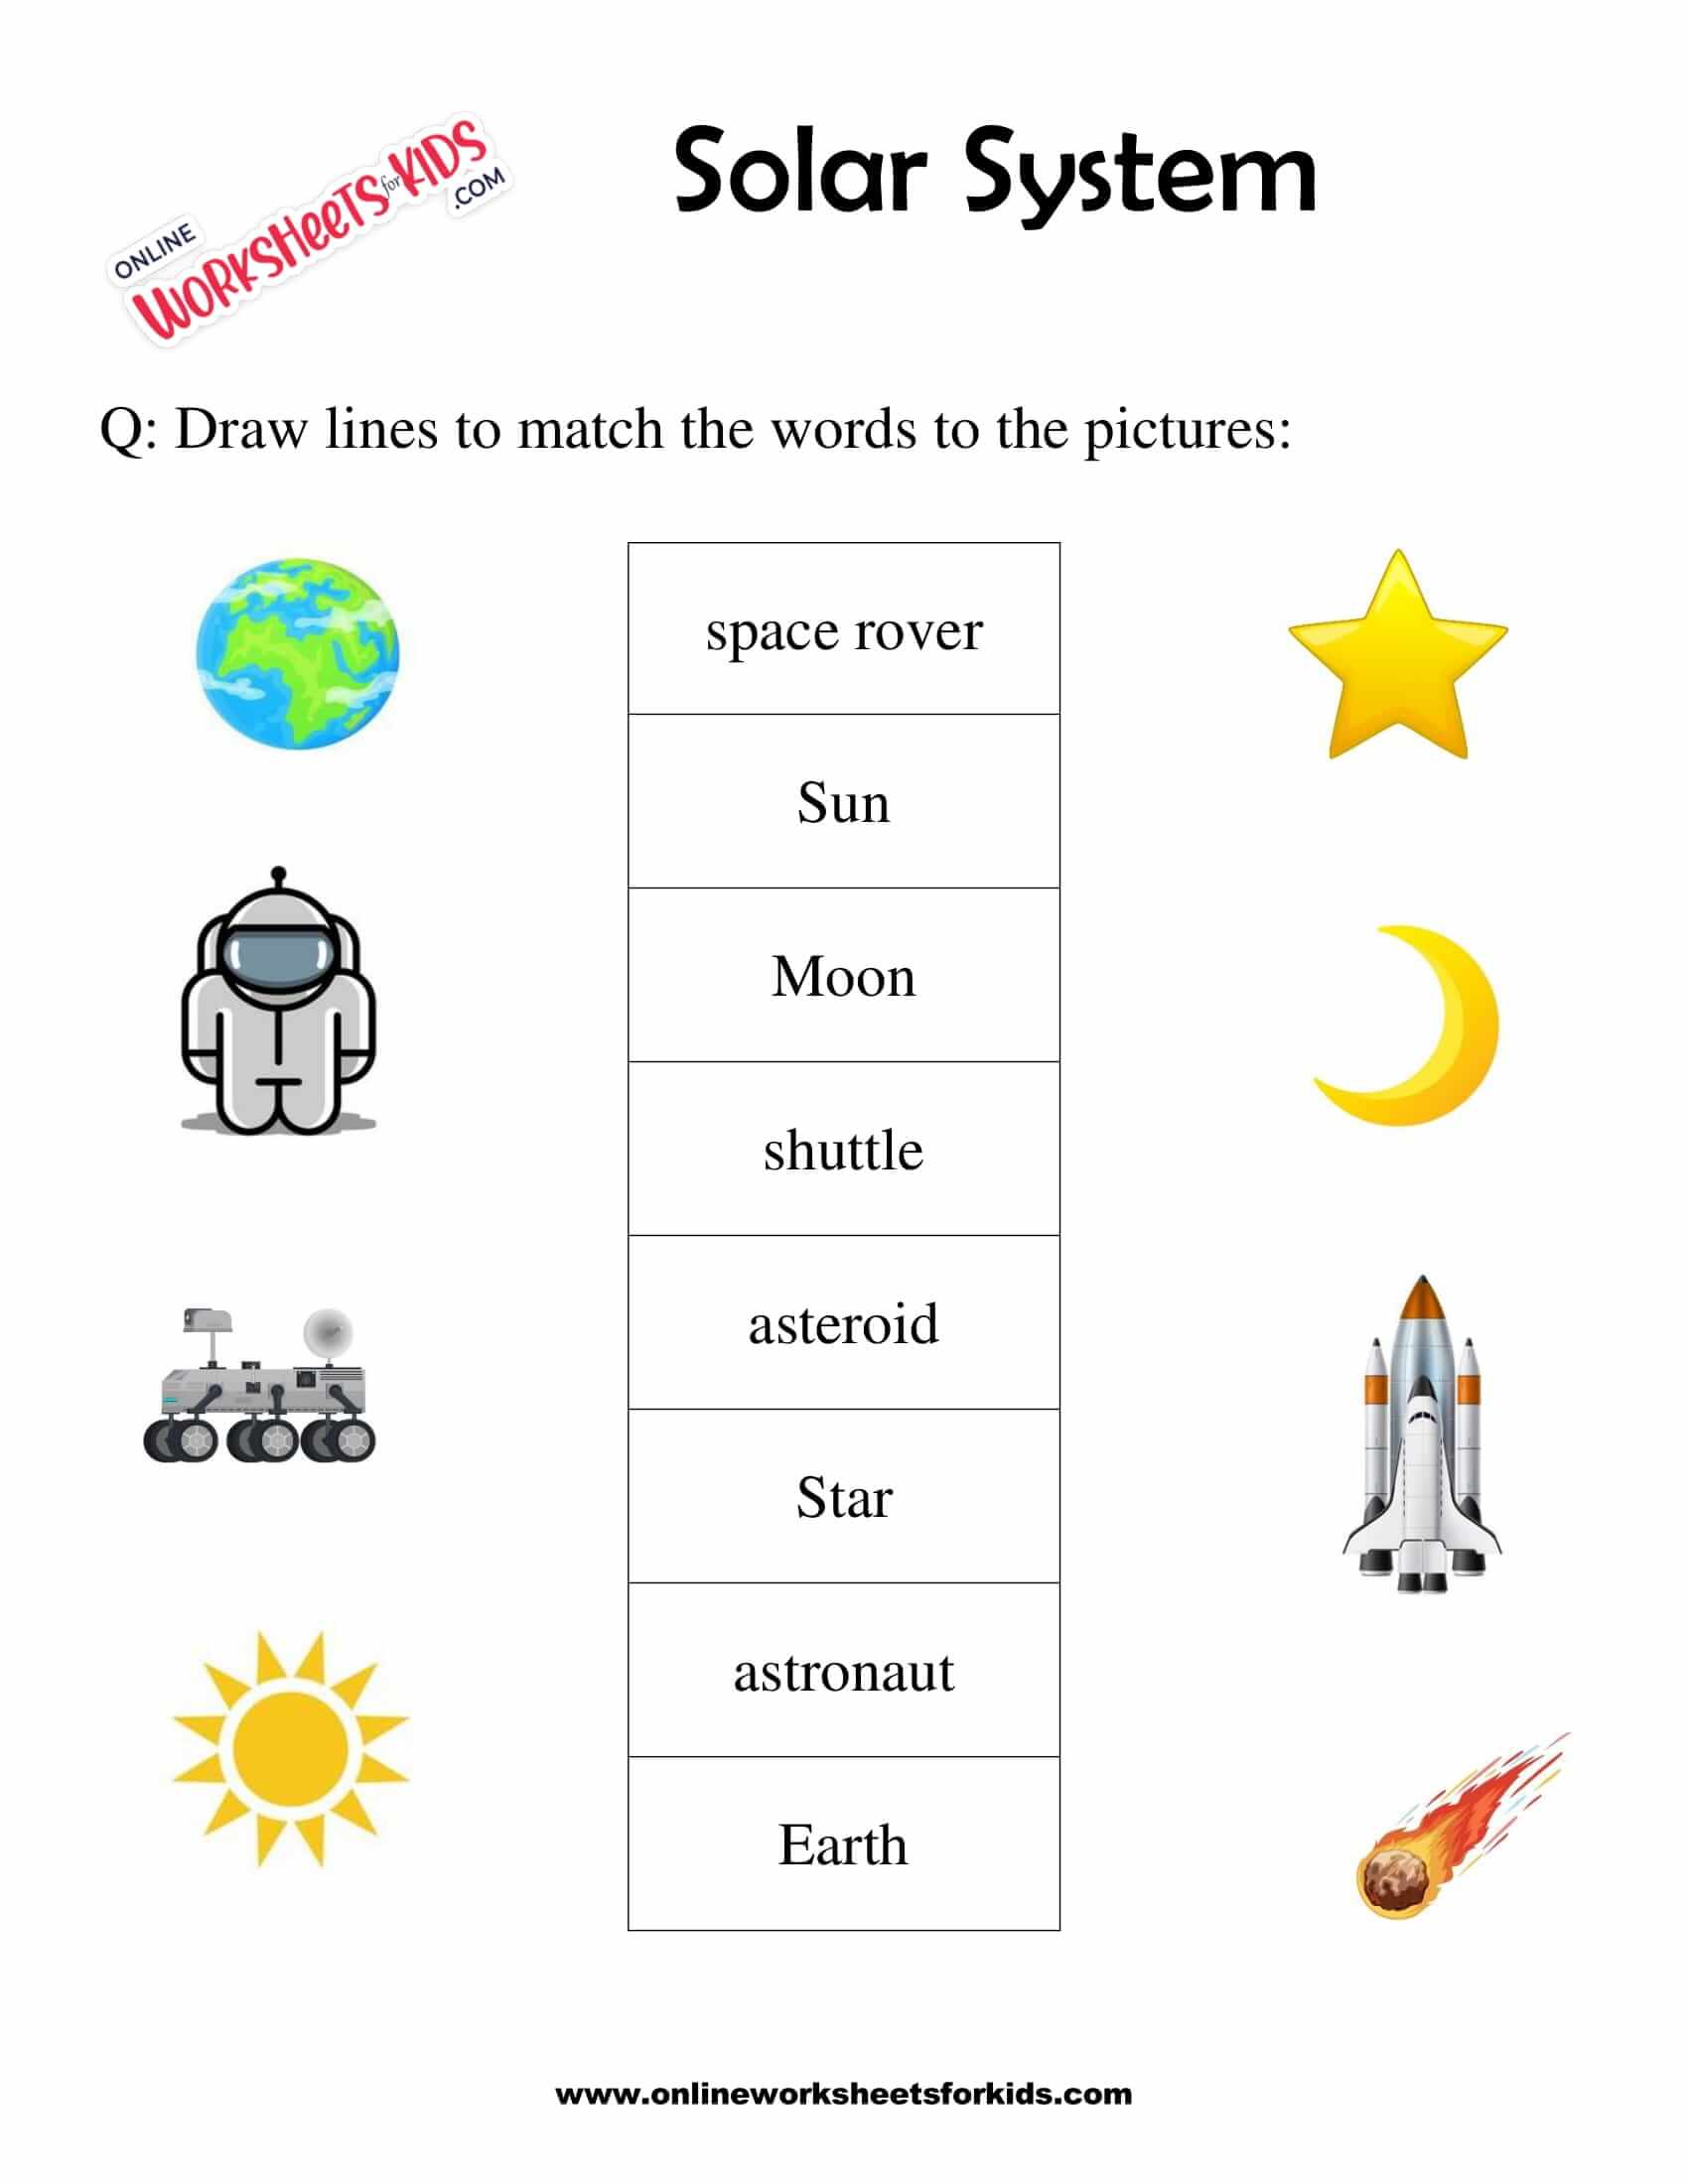 planets for kids worksheets